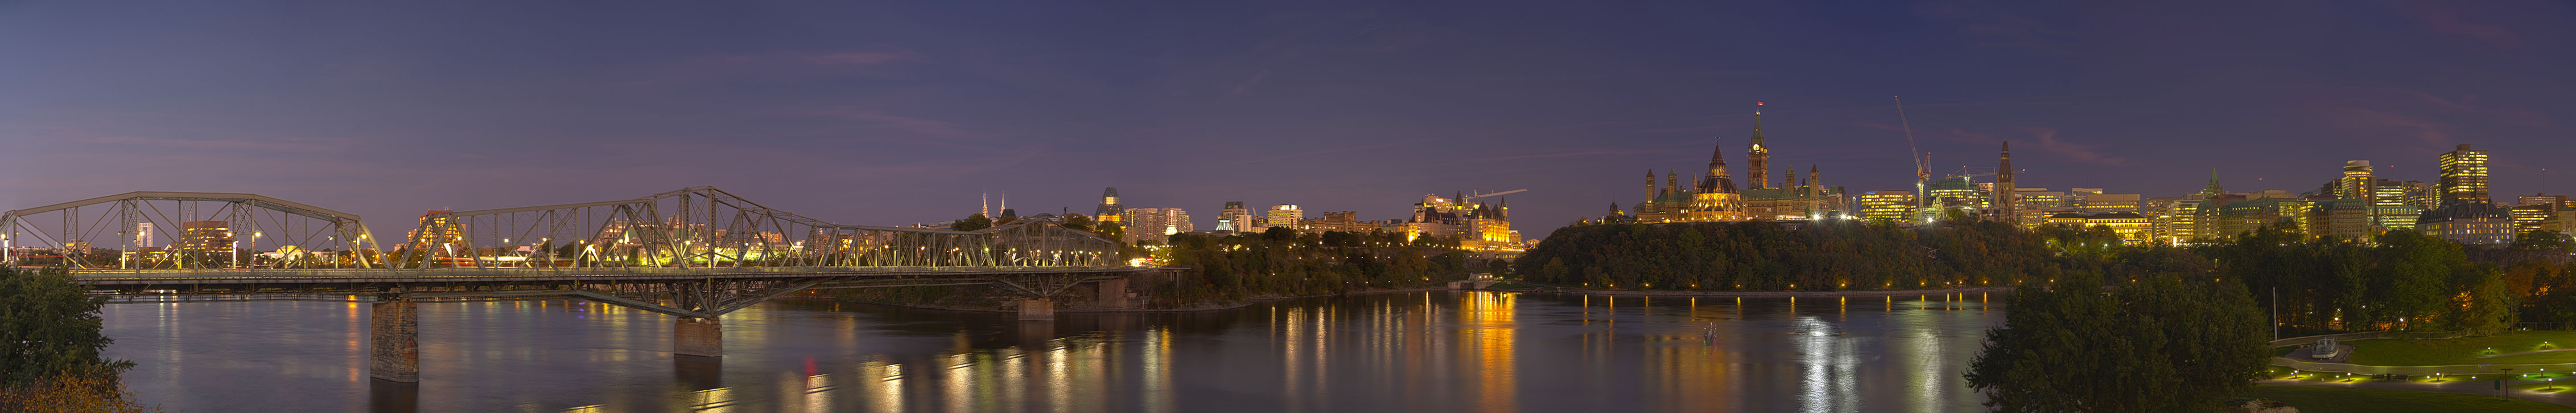 Kanada Ottawa HDR Panorama V2